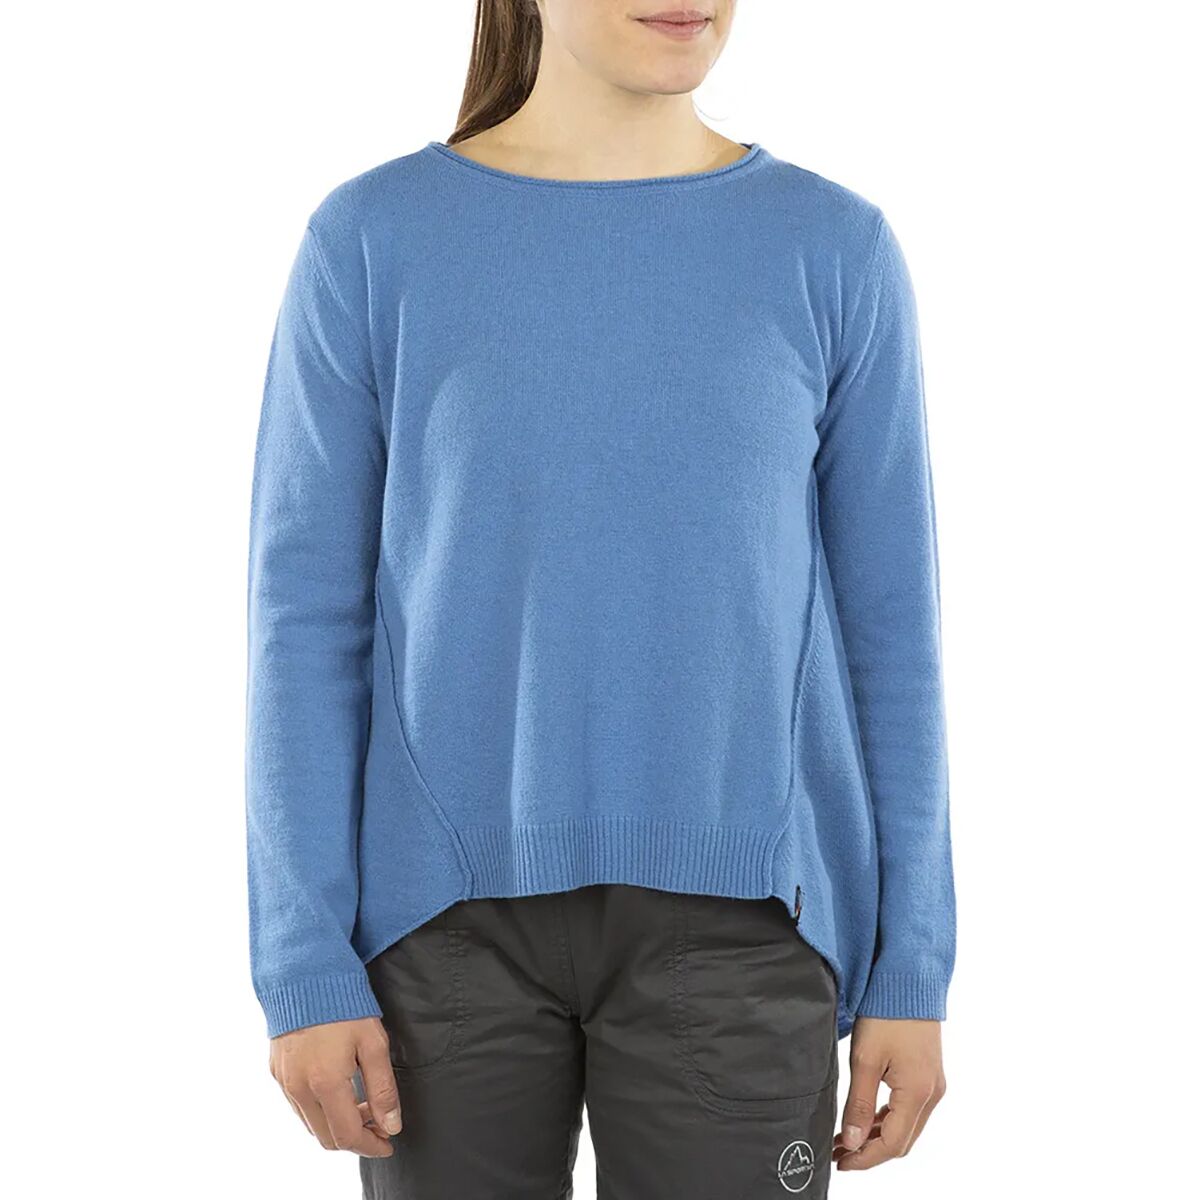 Linville Pullover Sweatshirt - Women